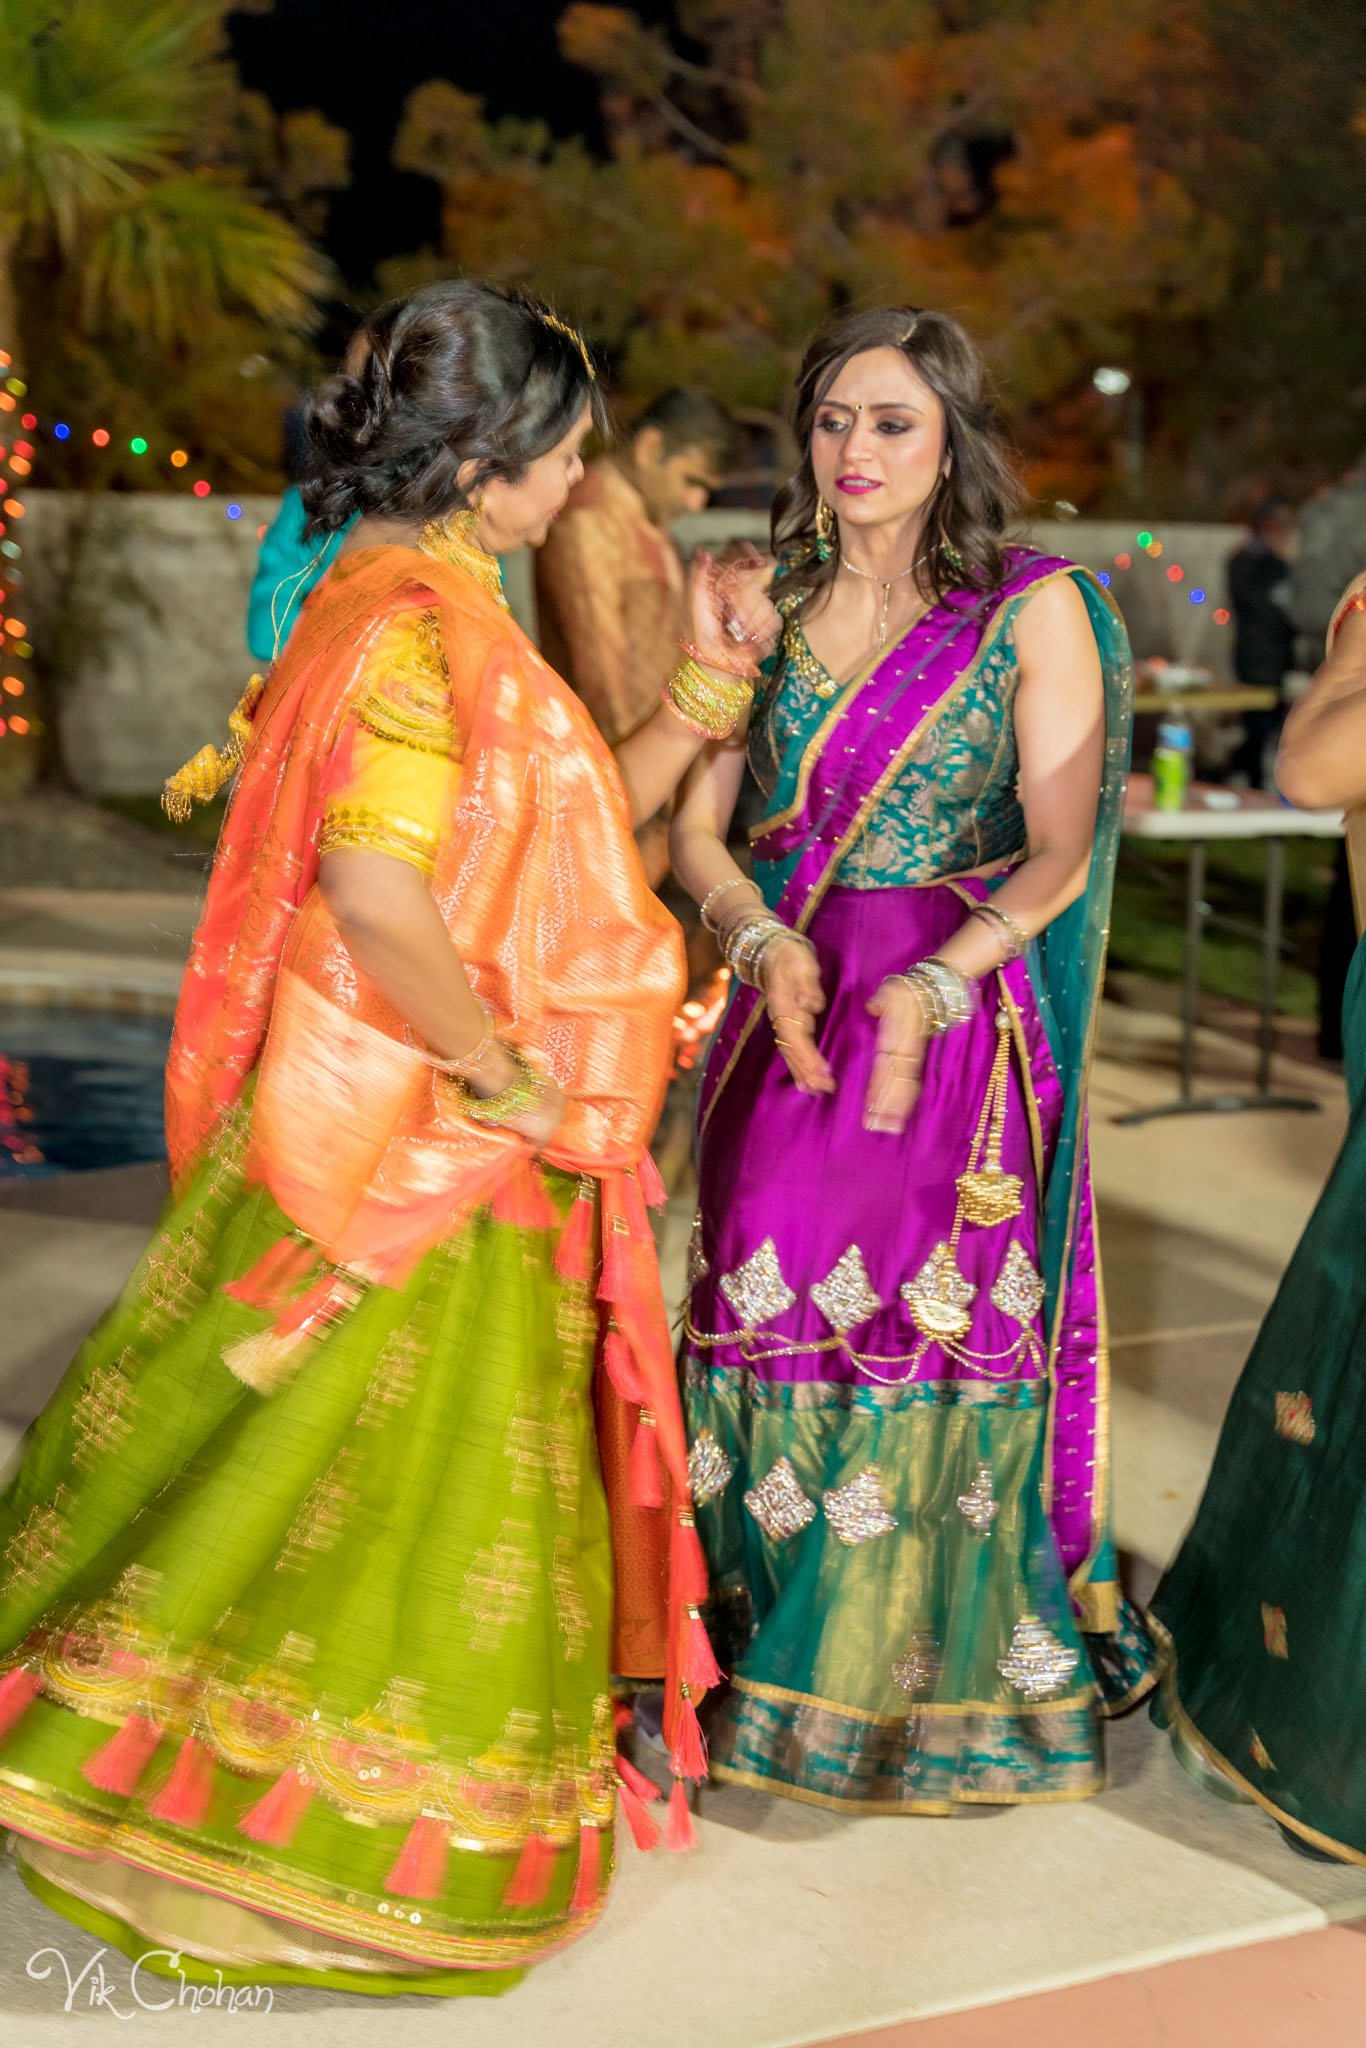 2022-02-04-Hely-&-Parth-Garba-Night-Indian-Wedding-Vik-Chohan-Photography-Photo-Booth-Social-Media-VCP-090.jpg